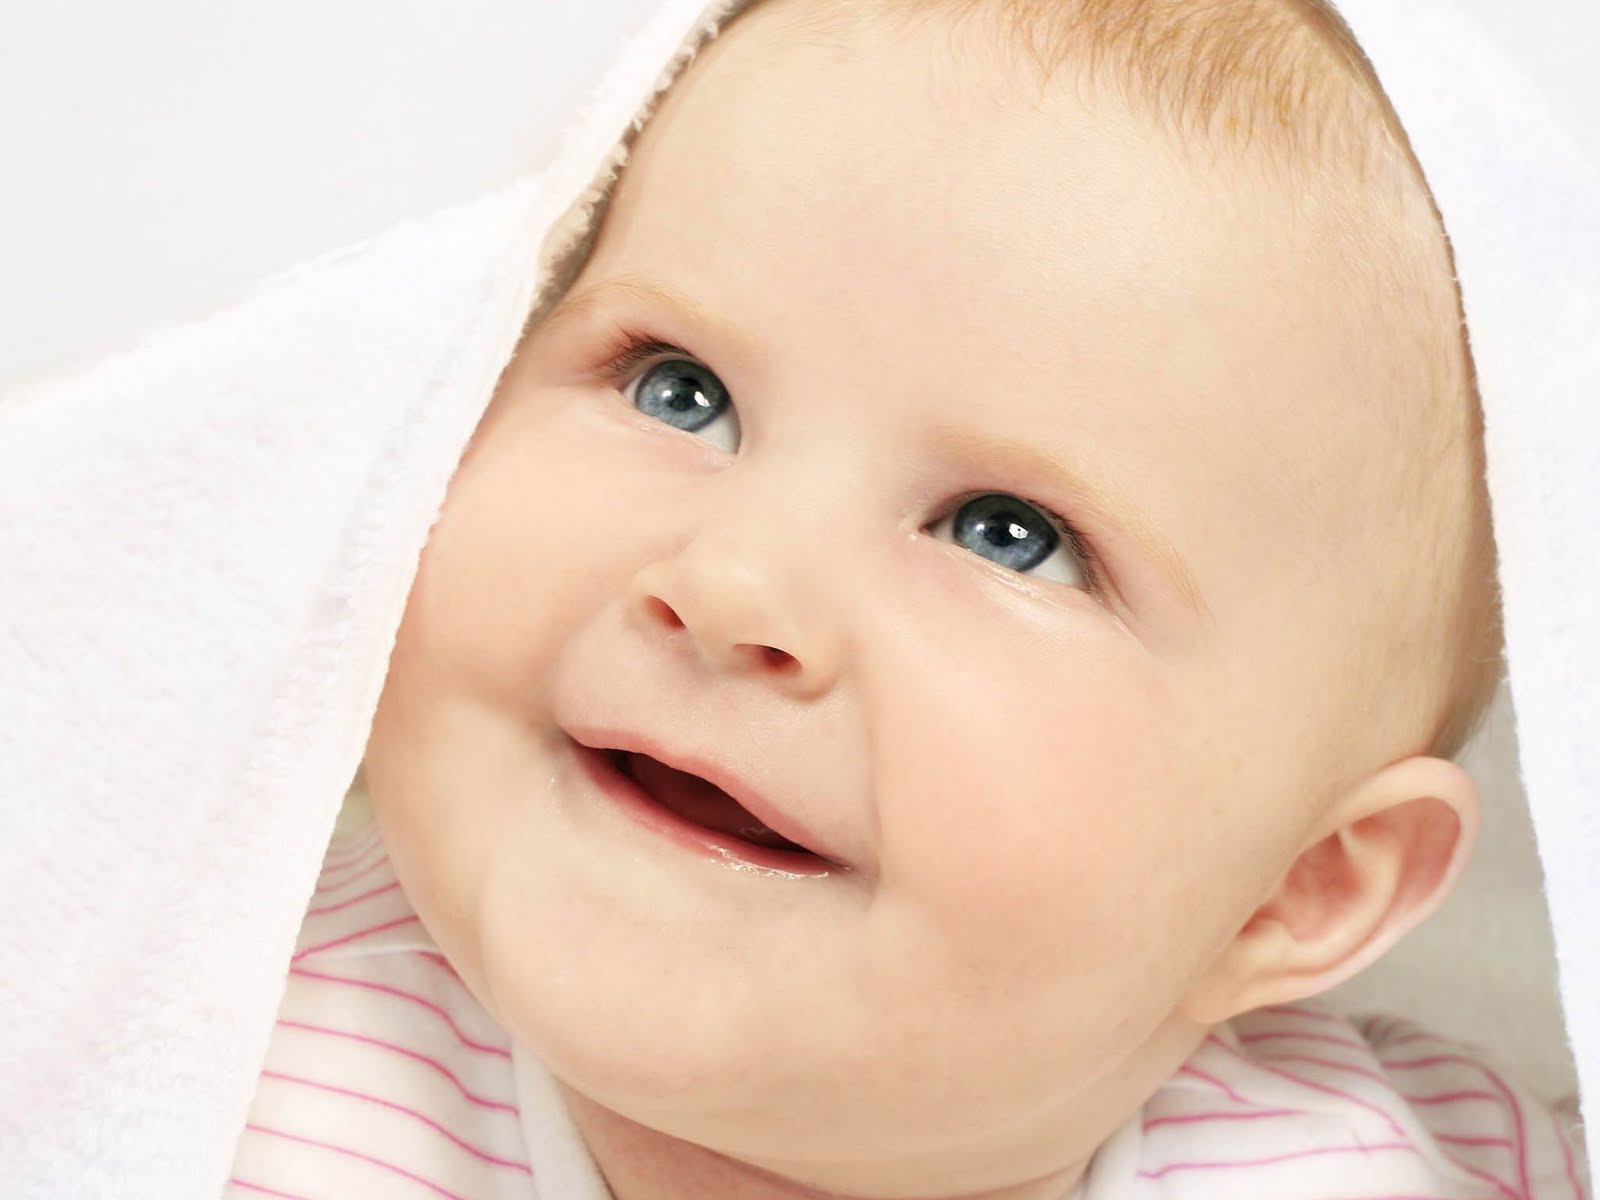 Funny Babies Wallpaper HD In Baby Imageci